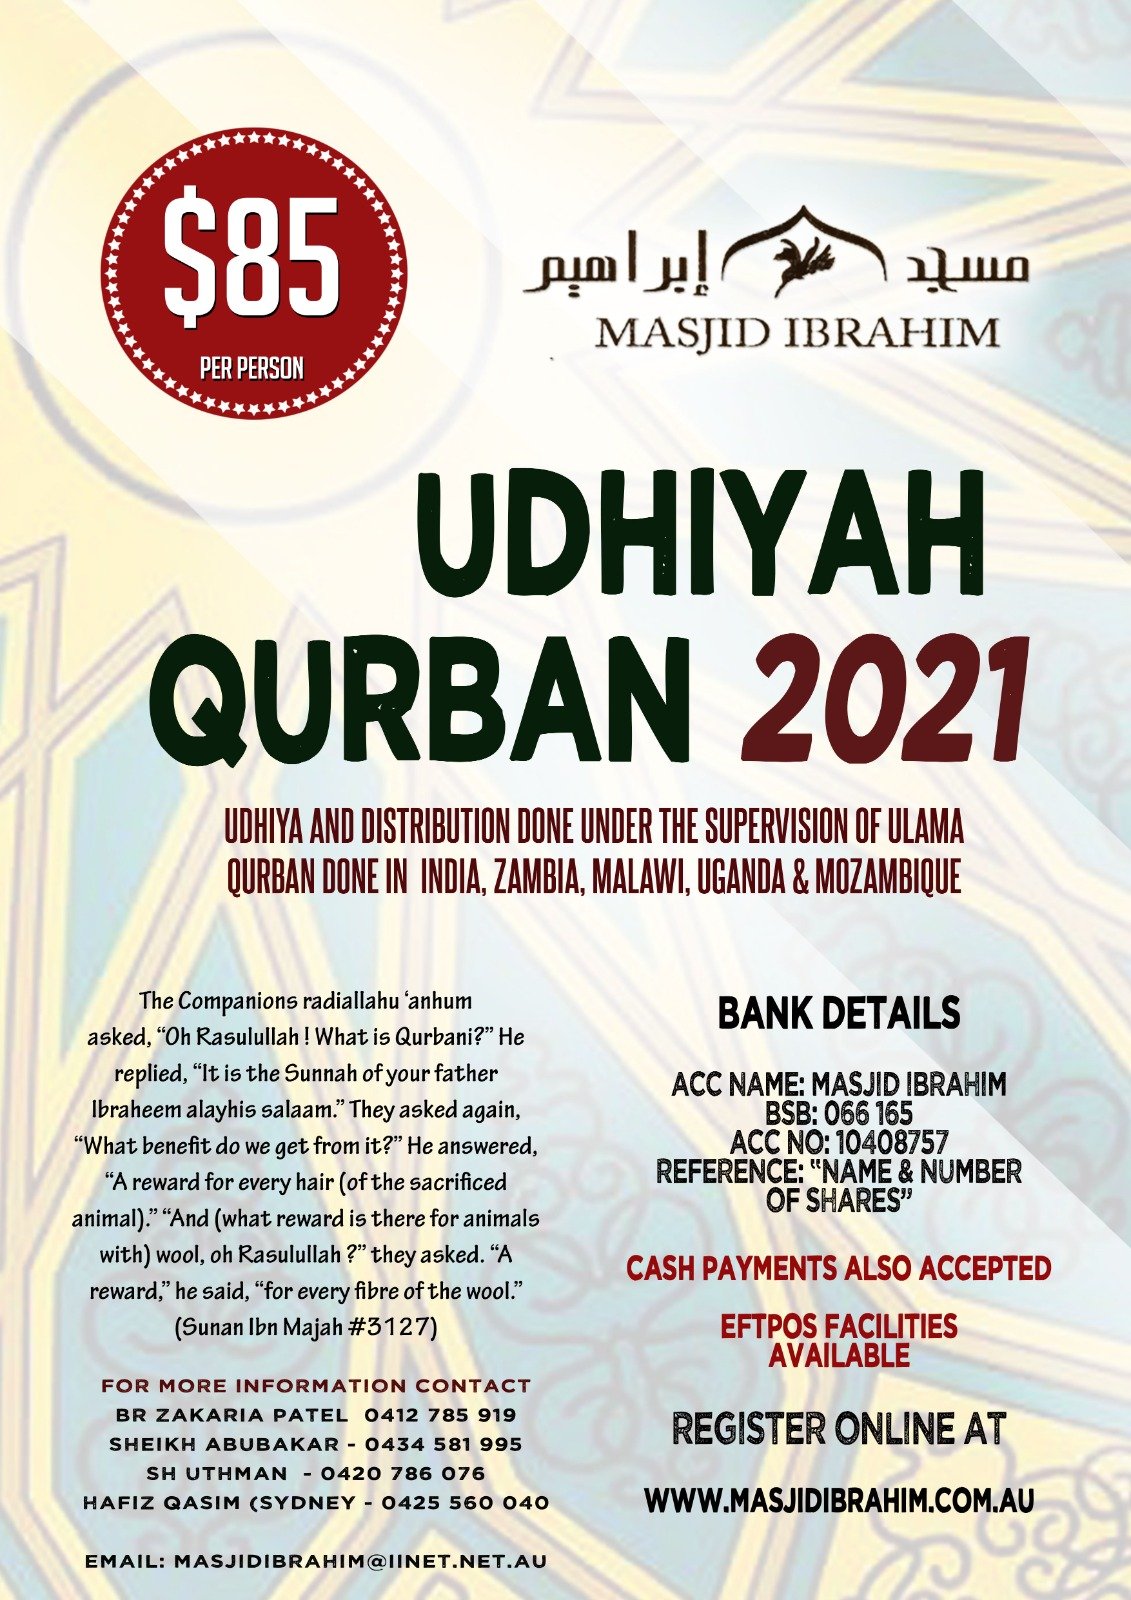 Masjid Ibrahim Qurban 2021